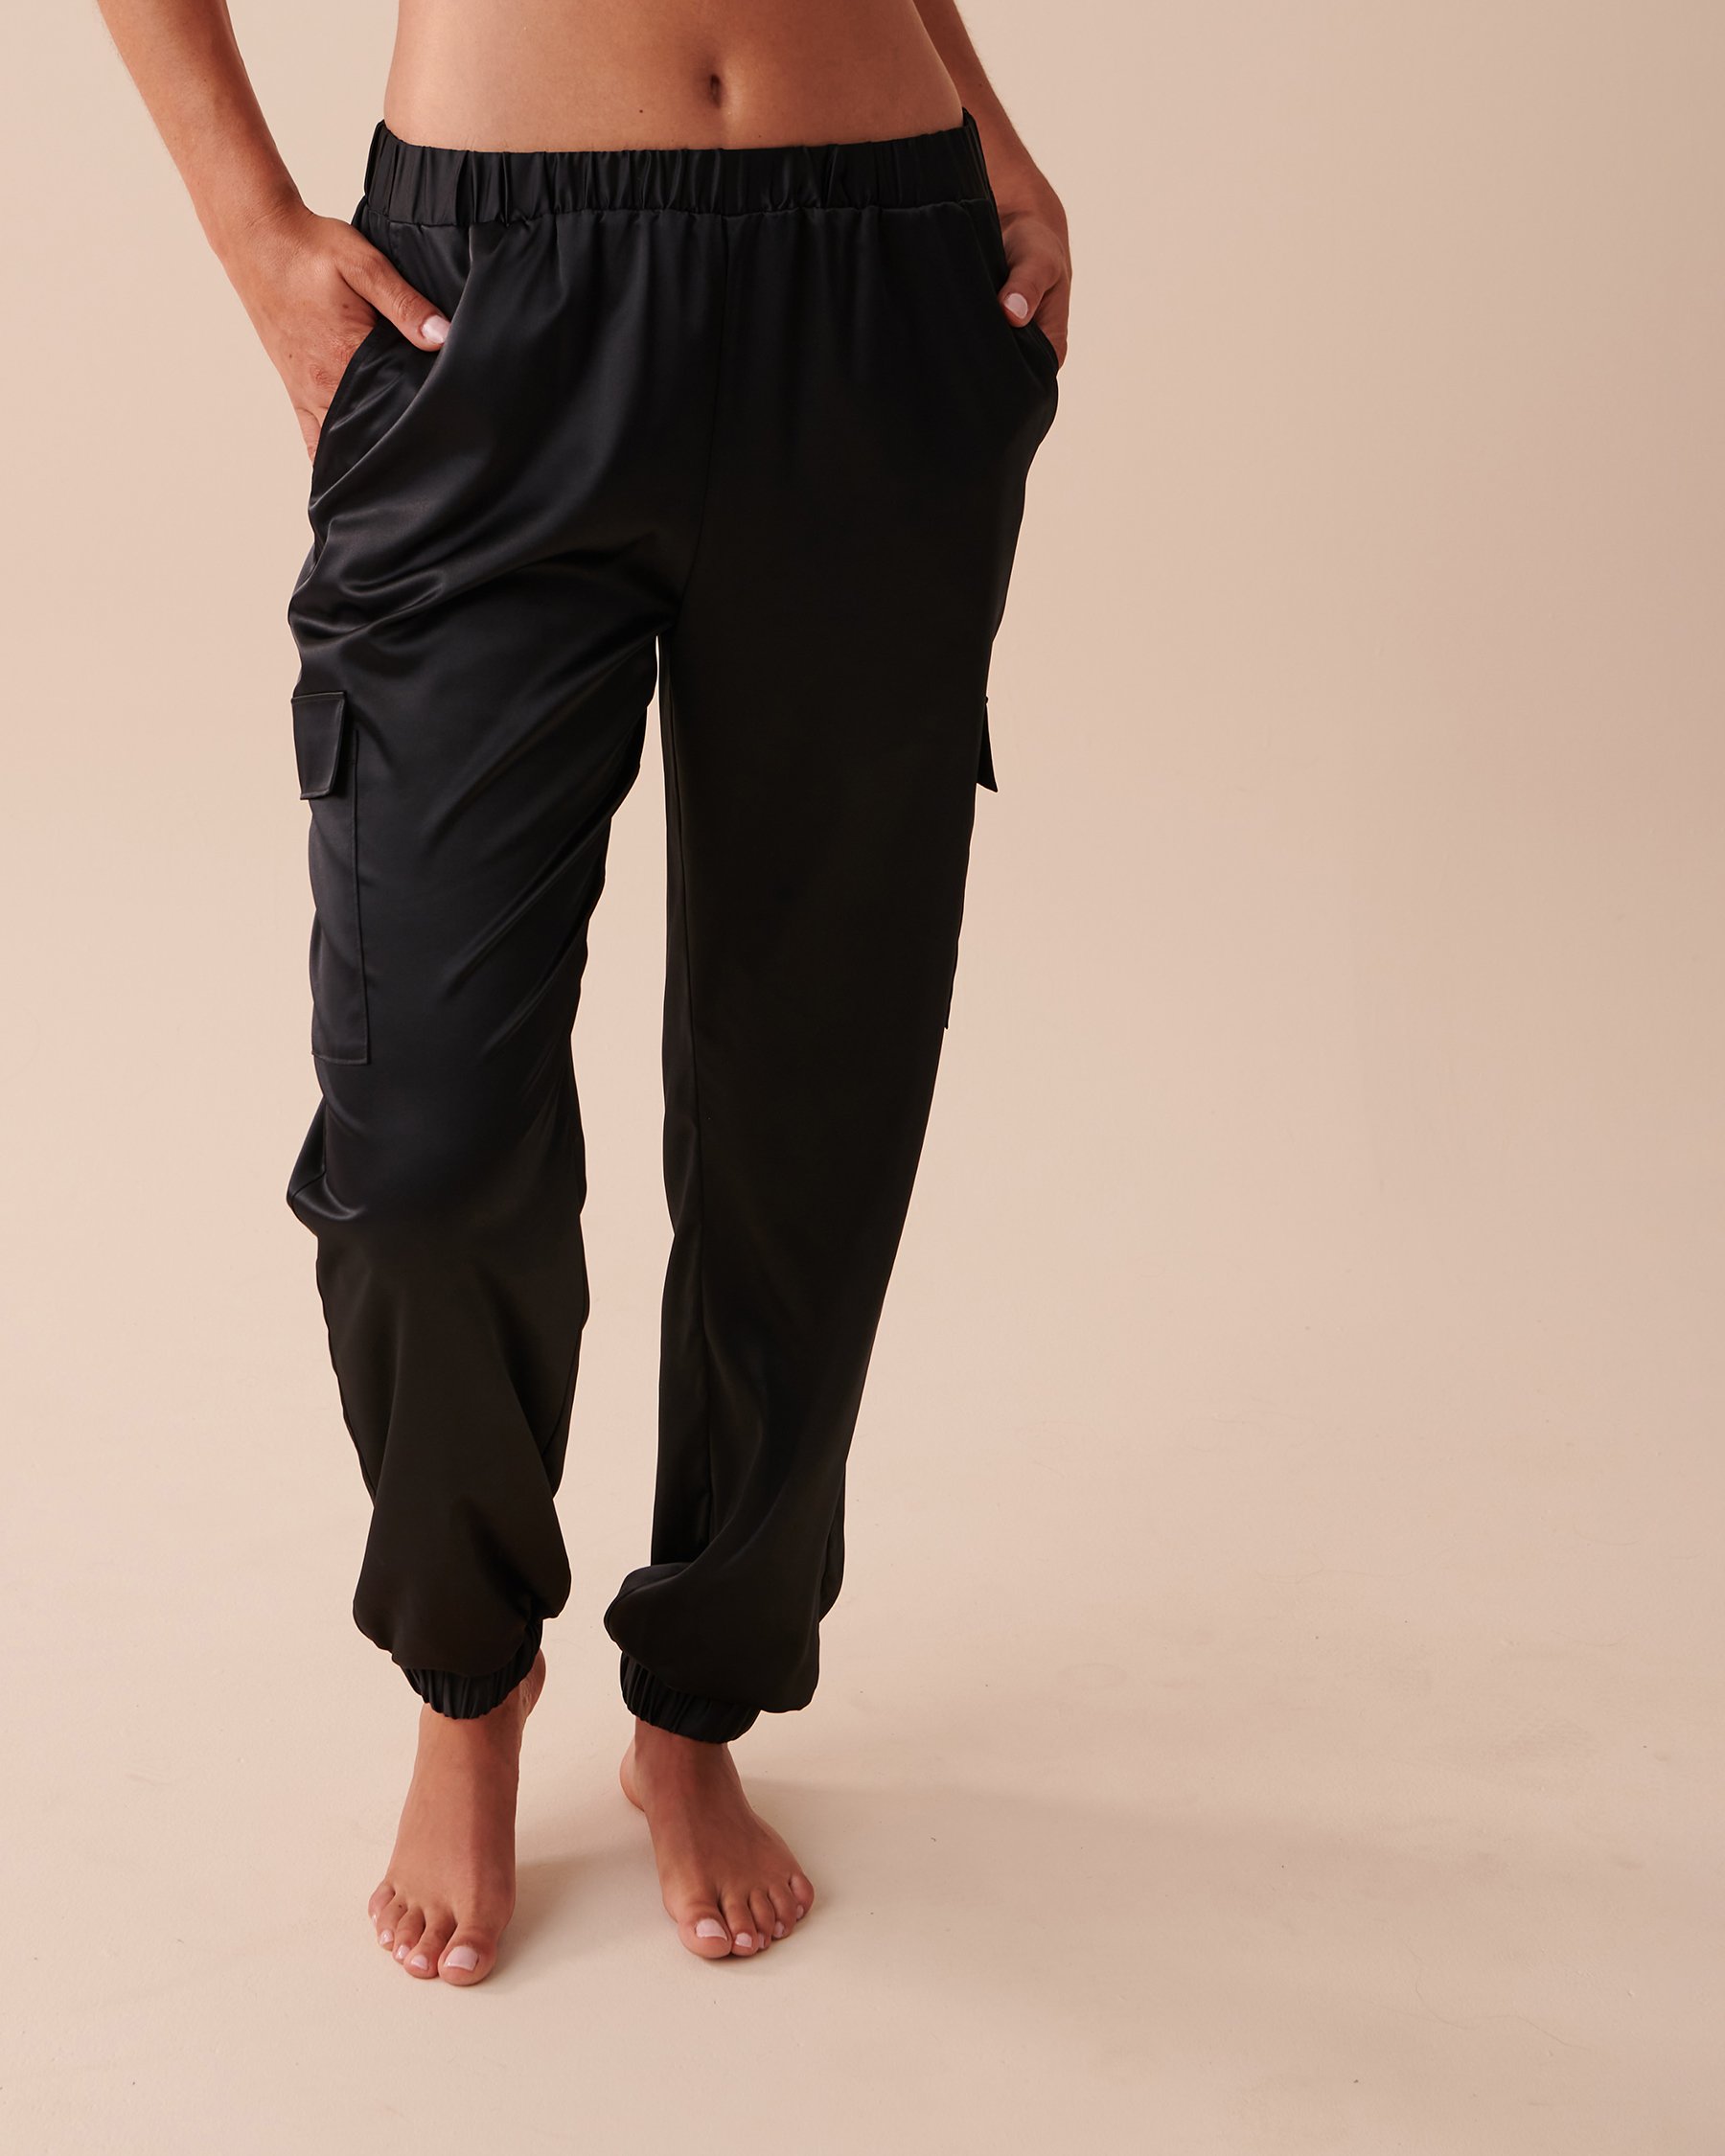 Pin by Bdover on Grey yoga pants